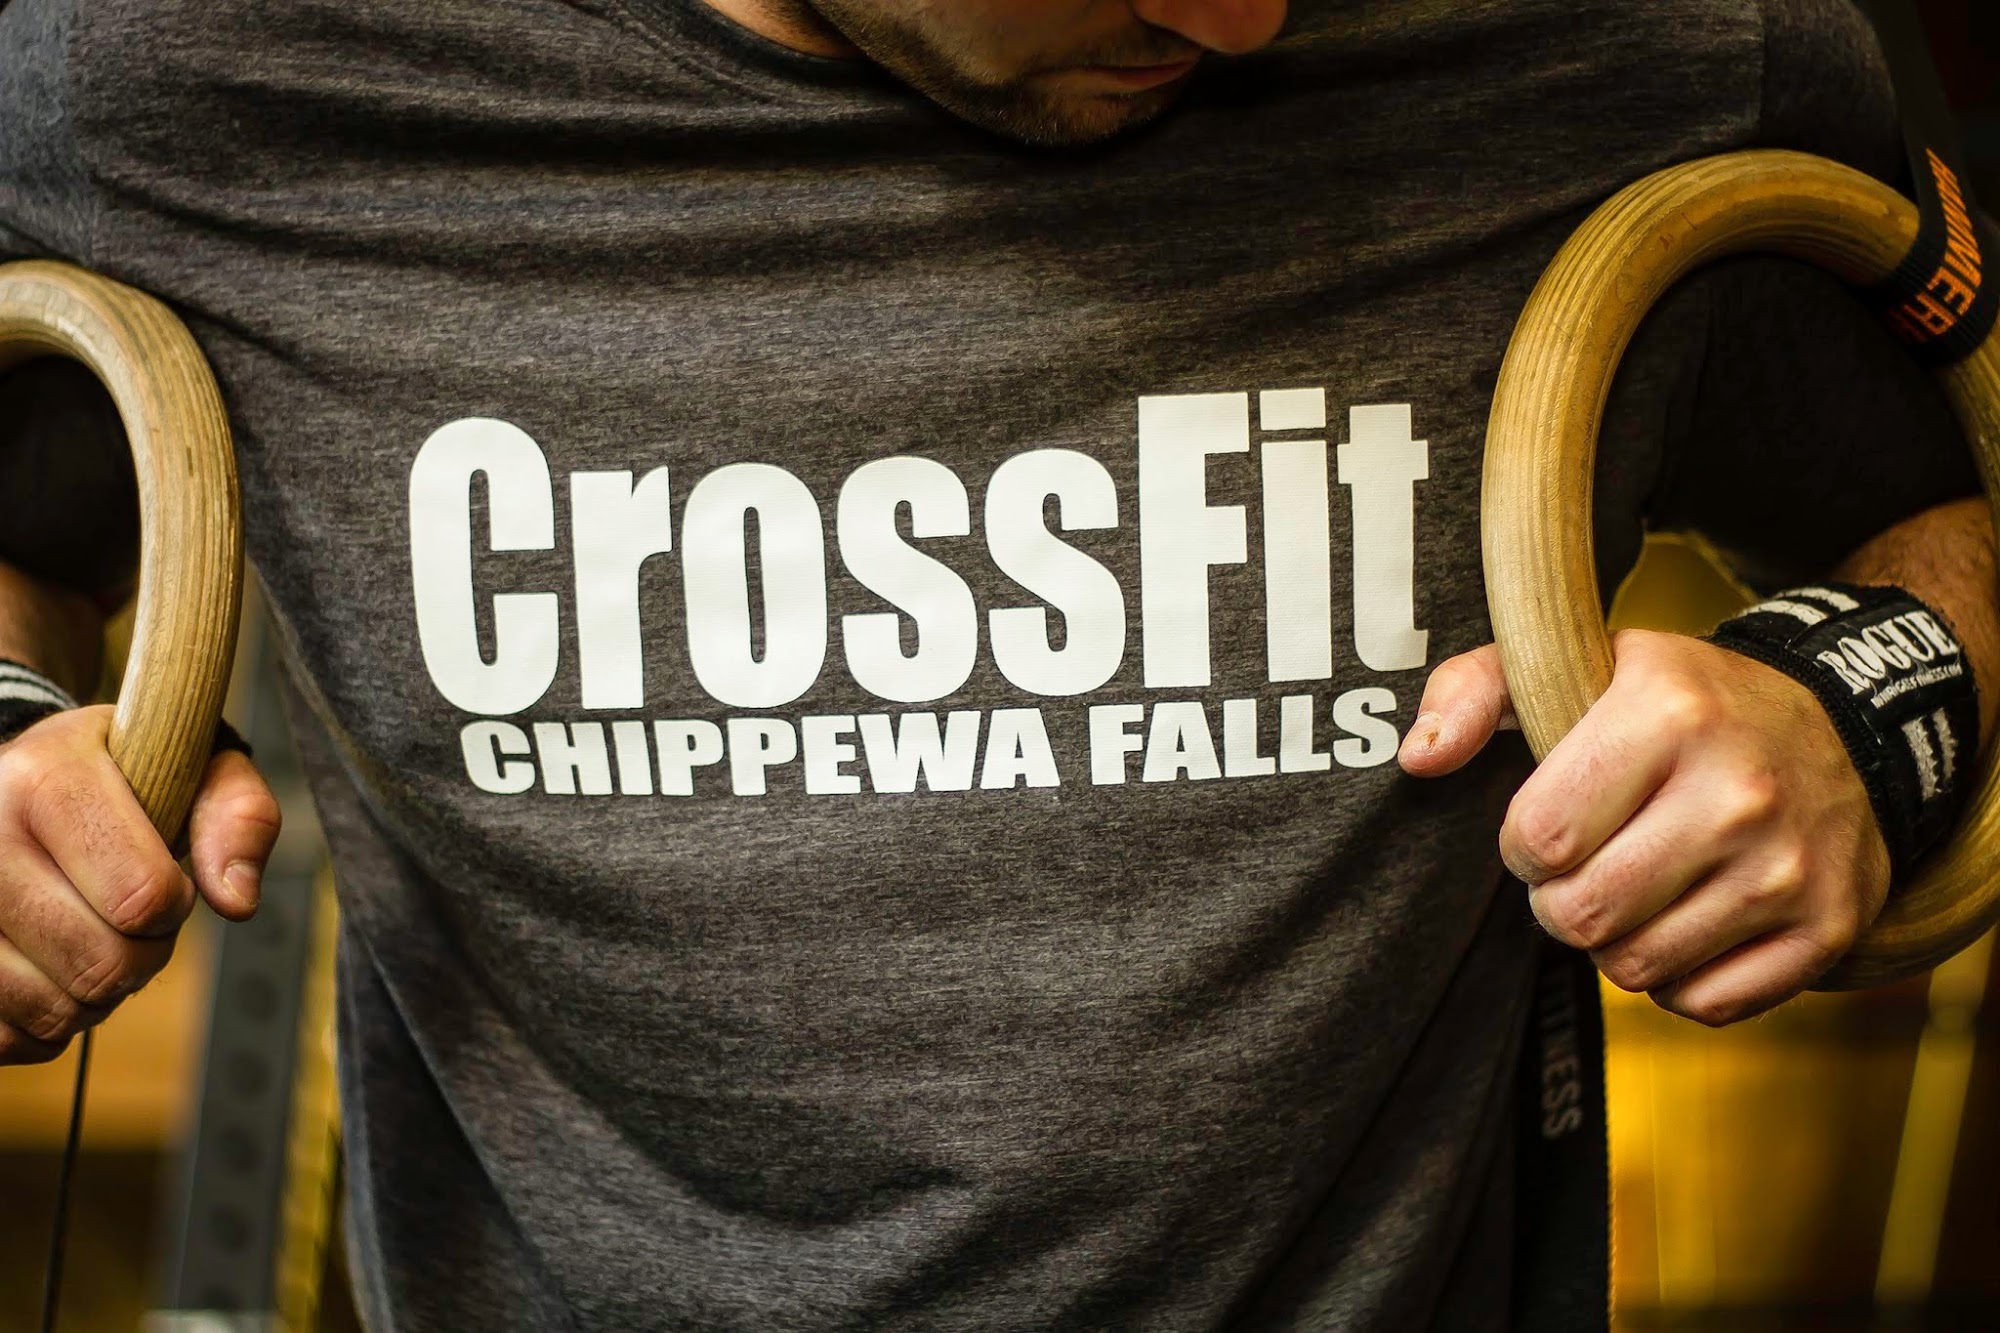 CrossFit Chippewa Falls